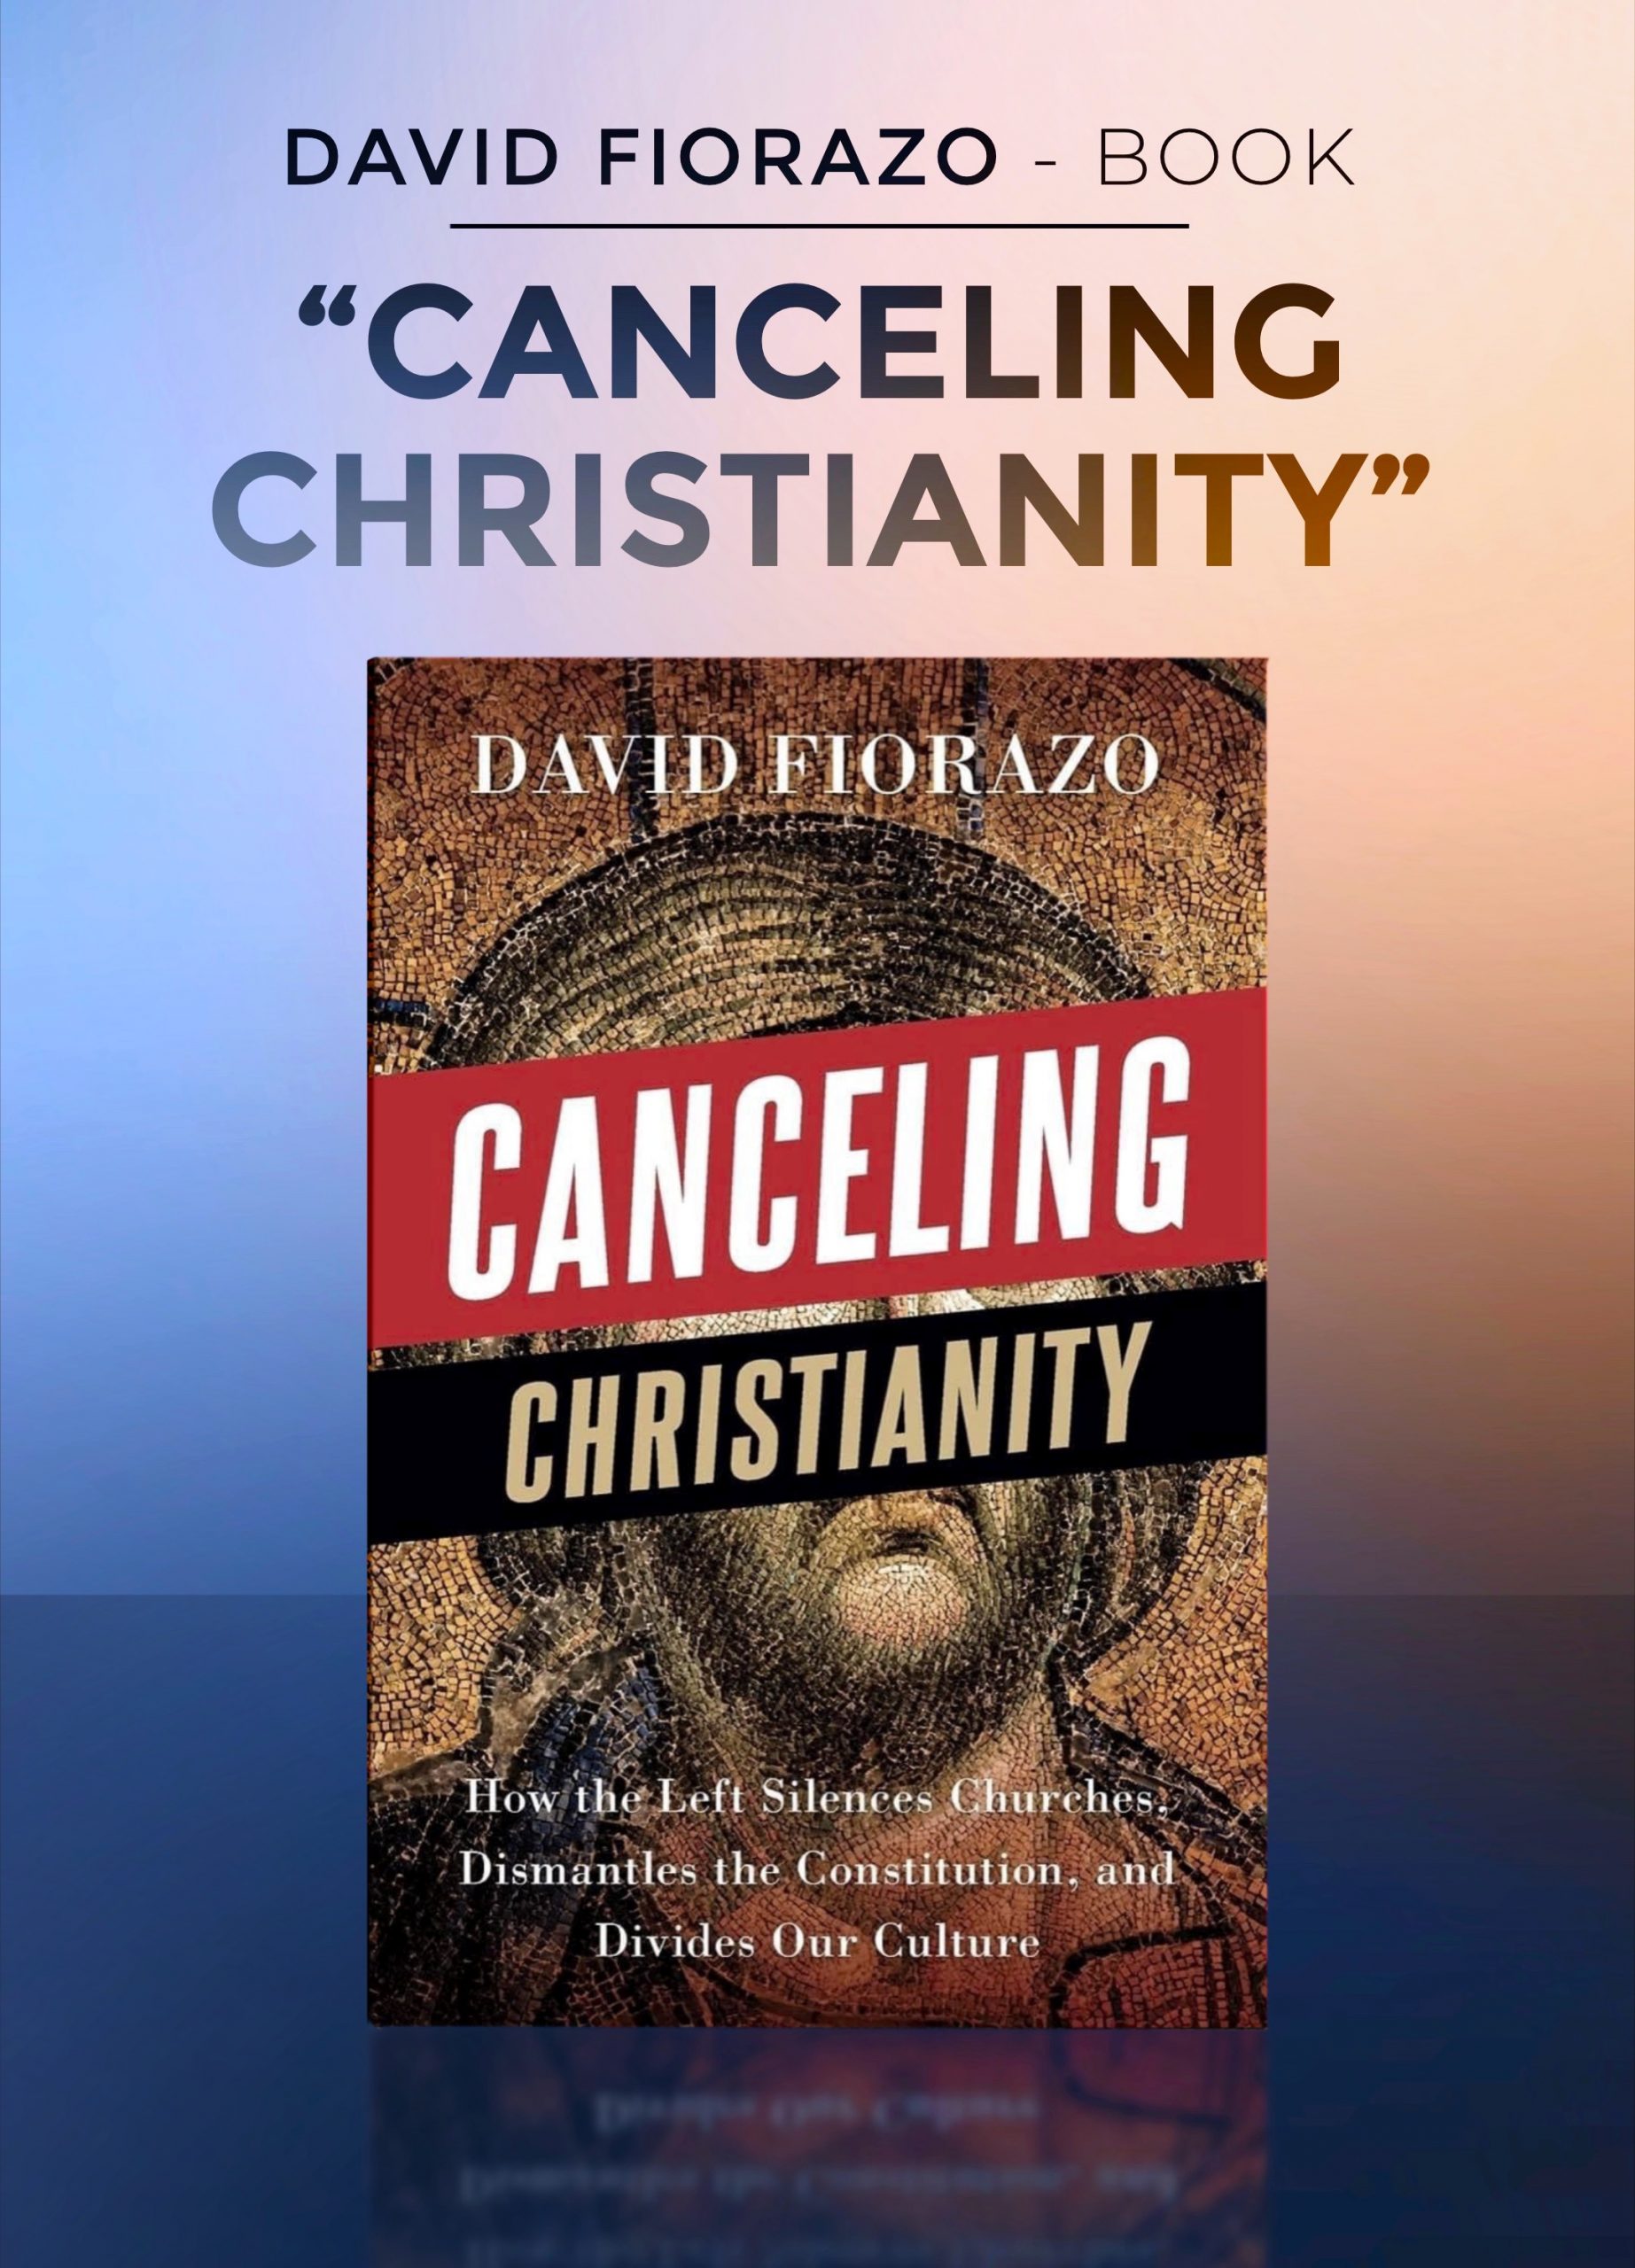 David Fiorazo - Canceling Christianity